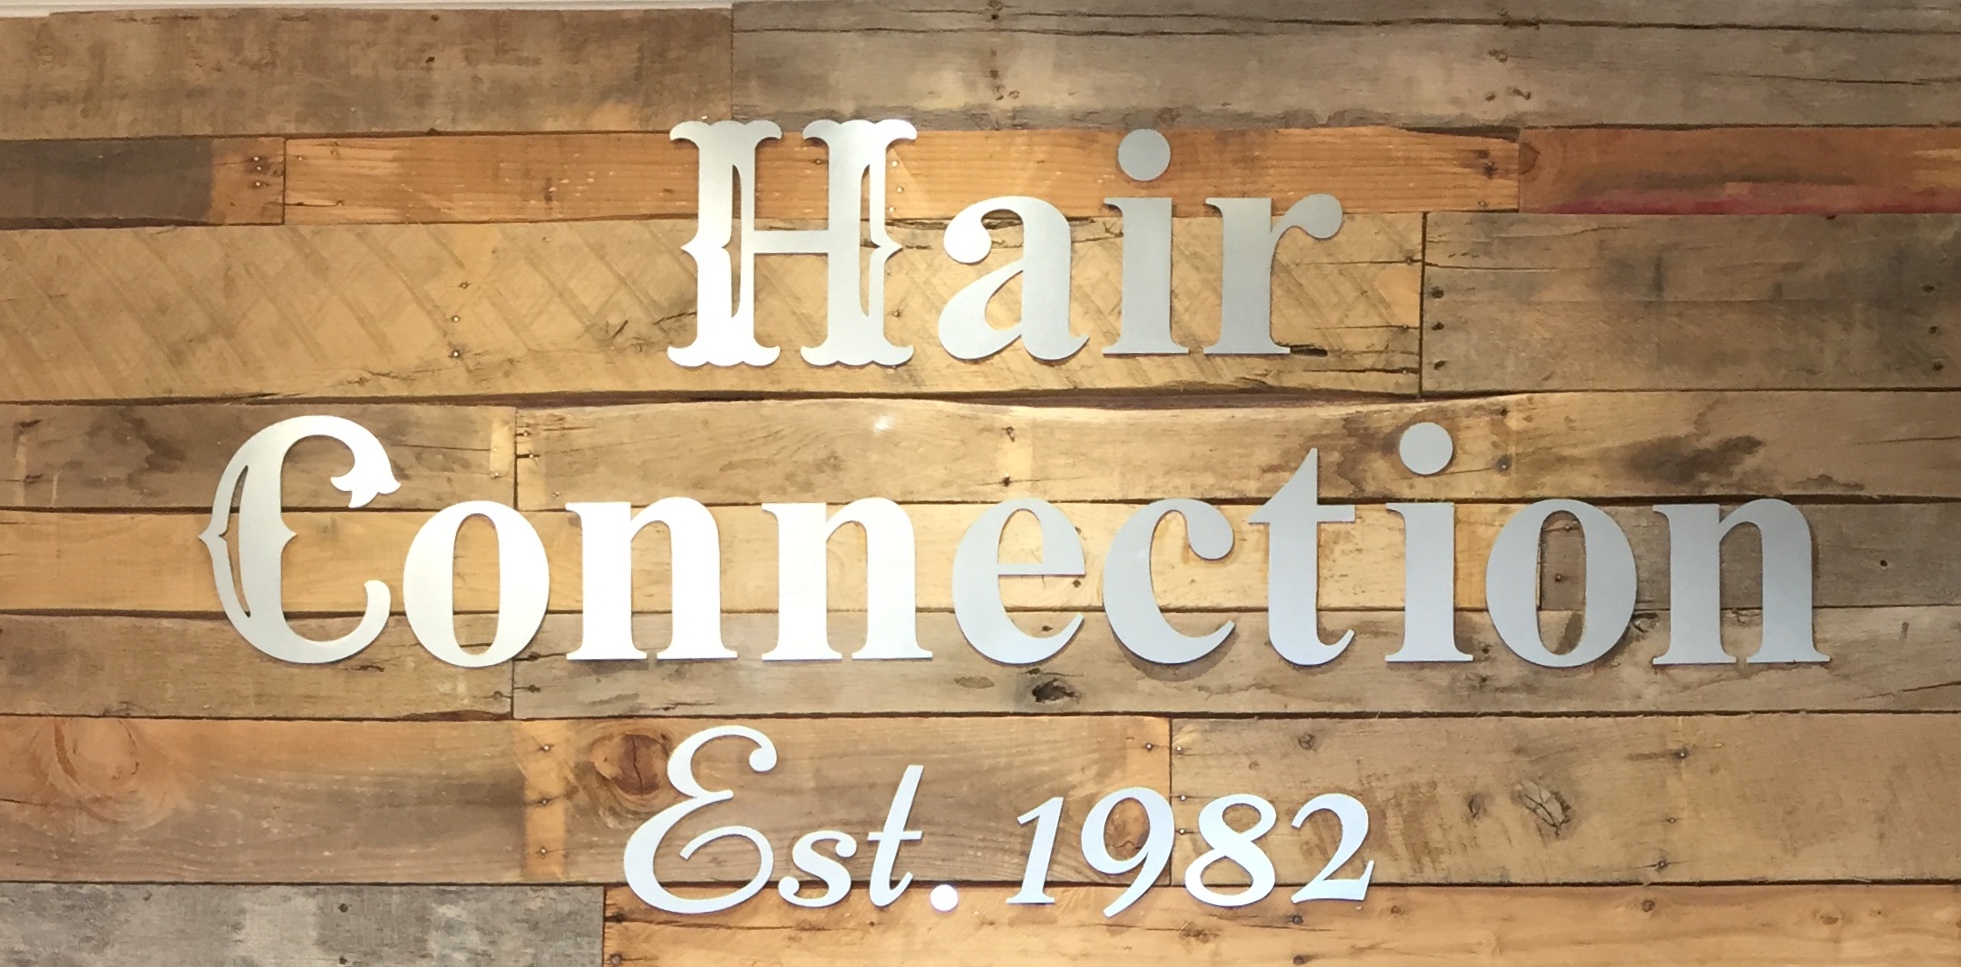 Hair Connection